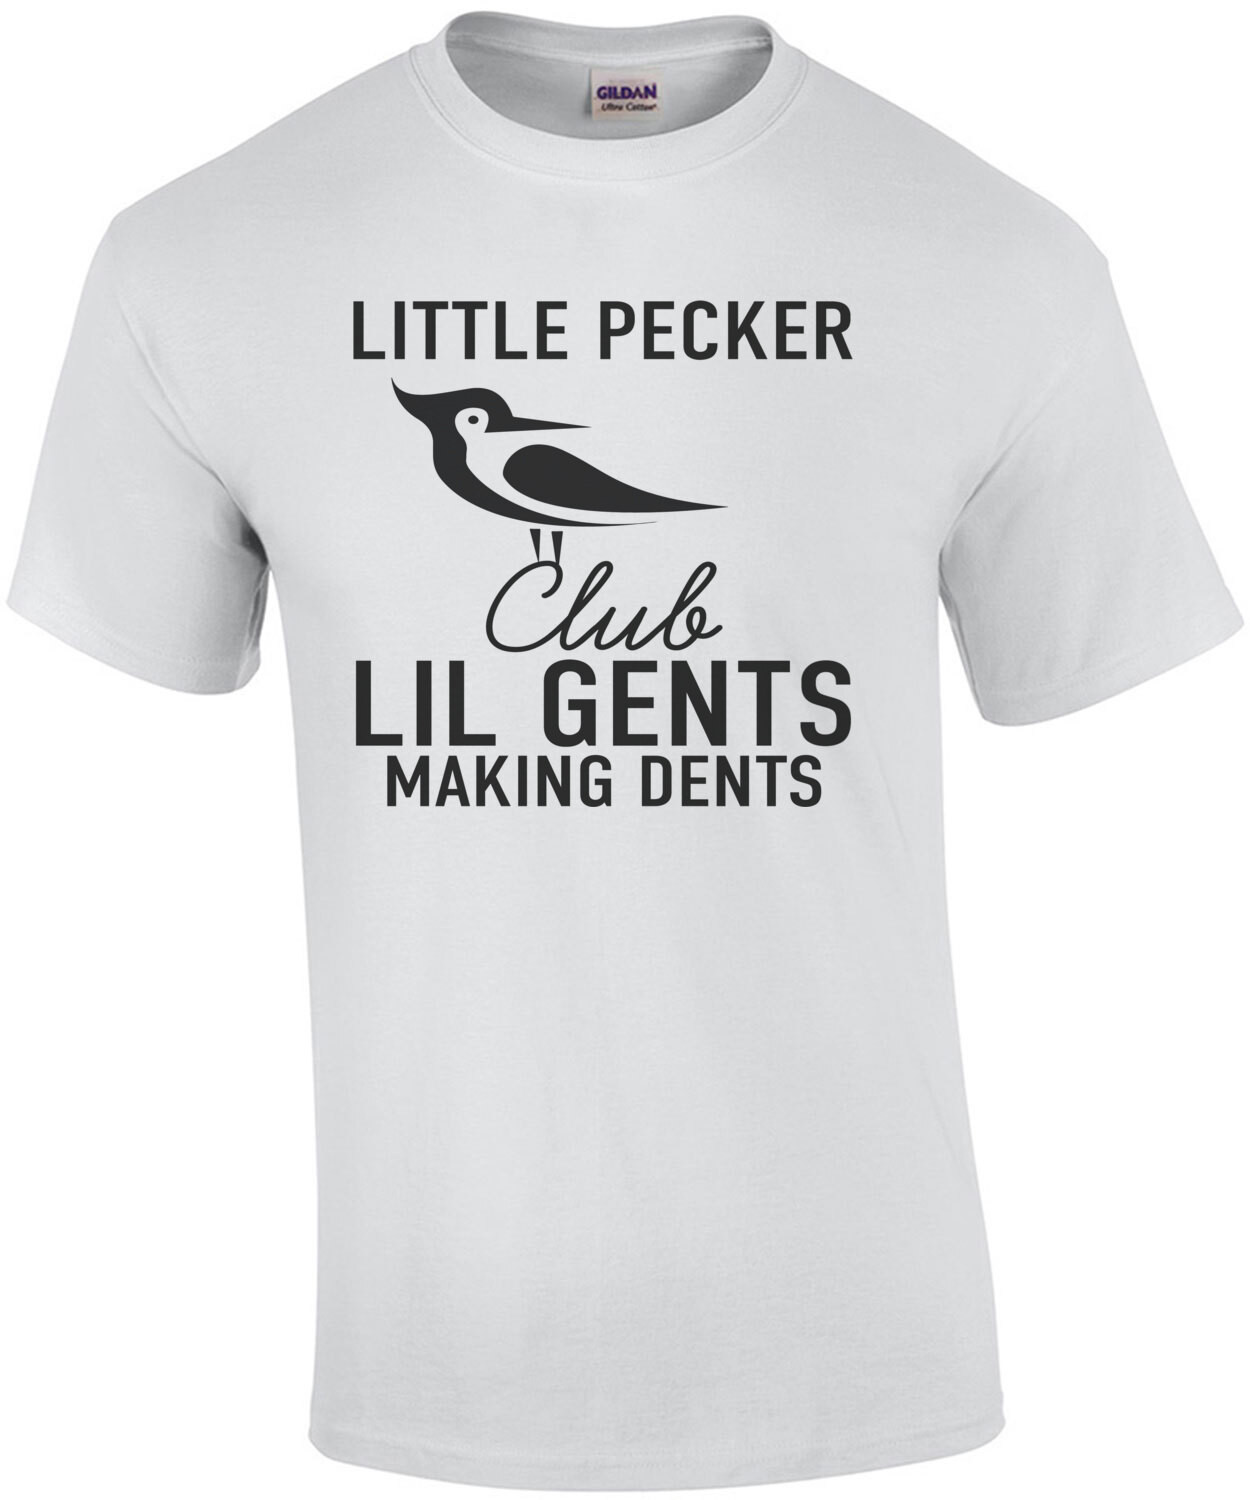 Little Pecker Club - Lil Gents Making Dents - Funny Sexual Pun T-Shirt